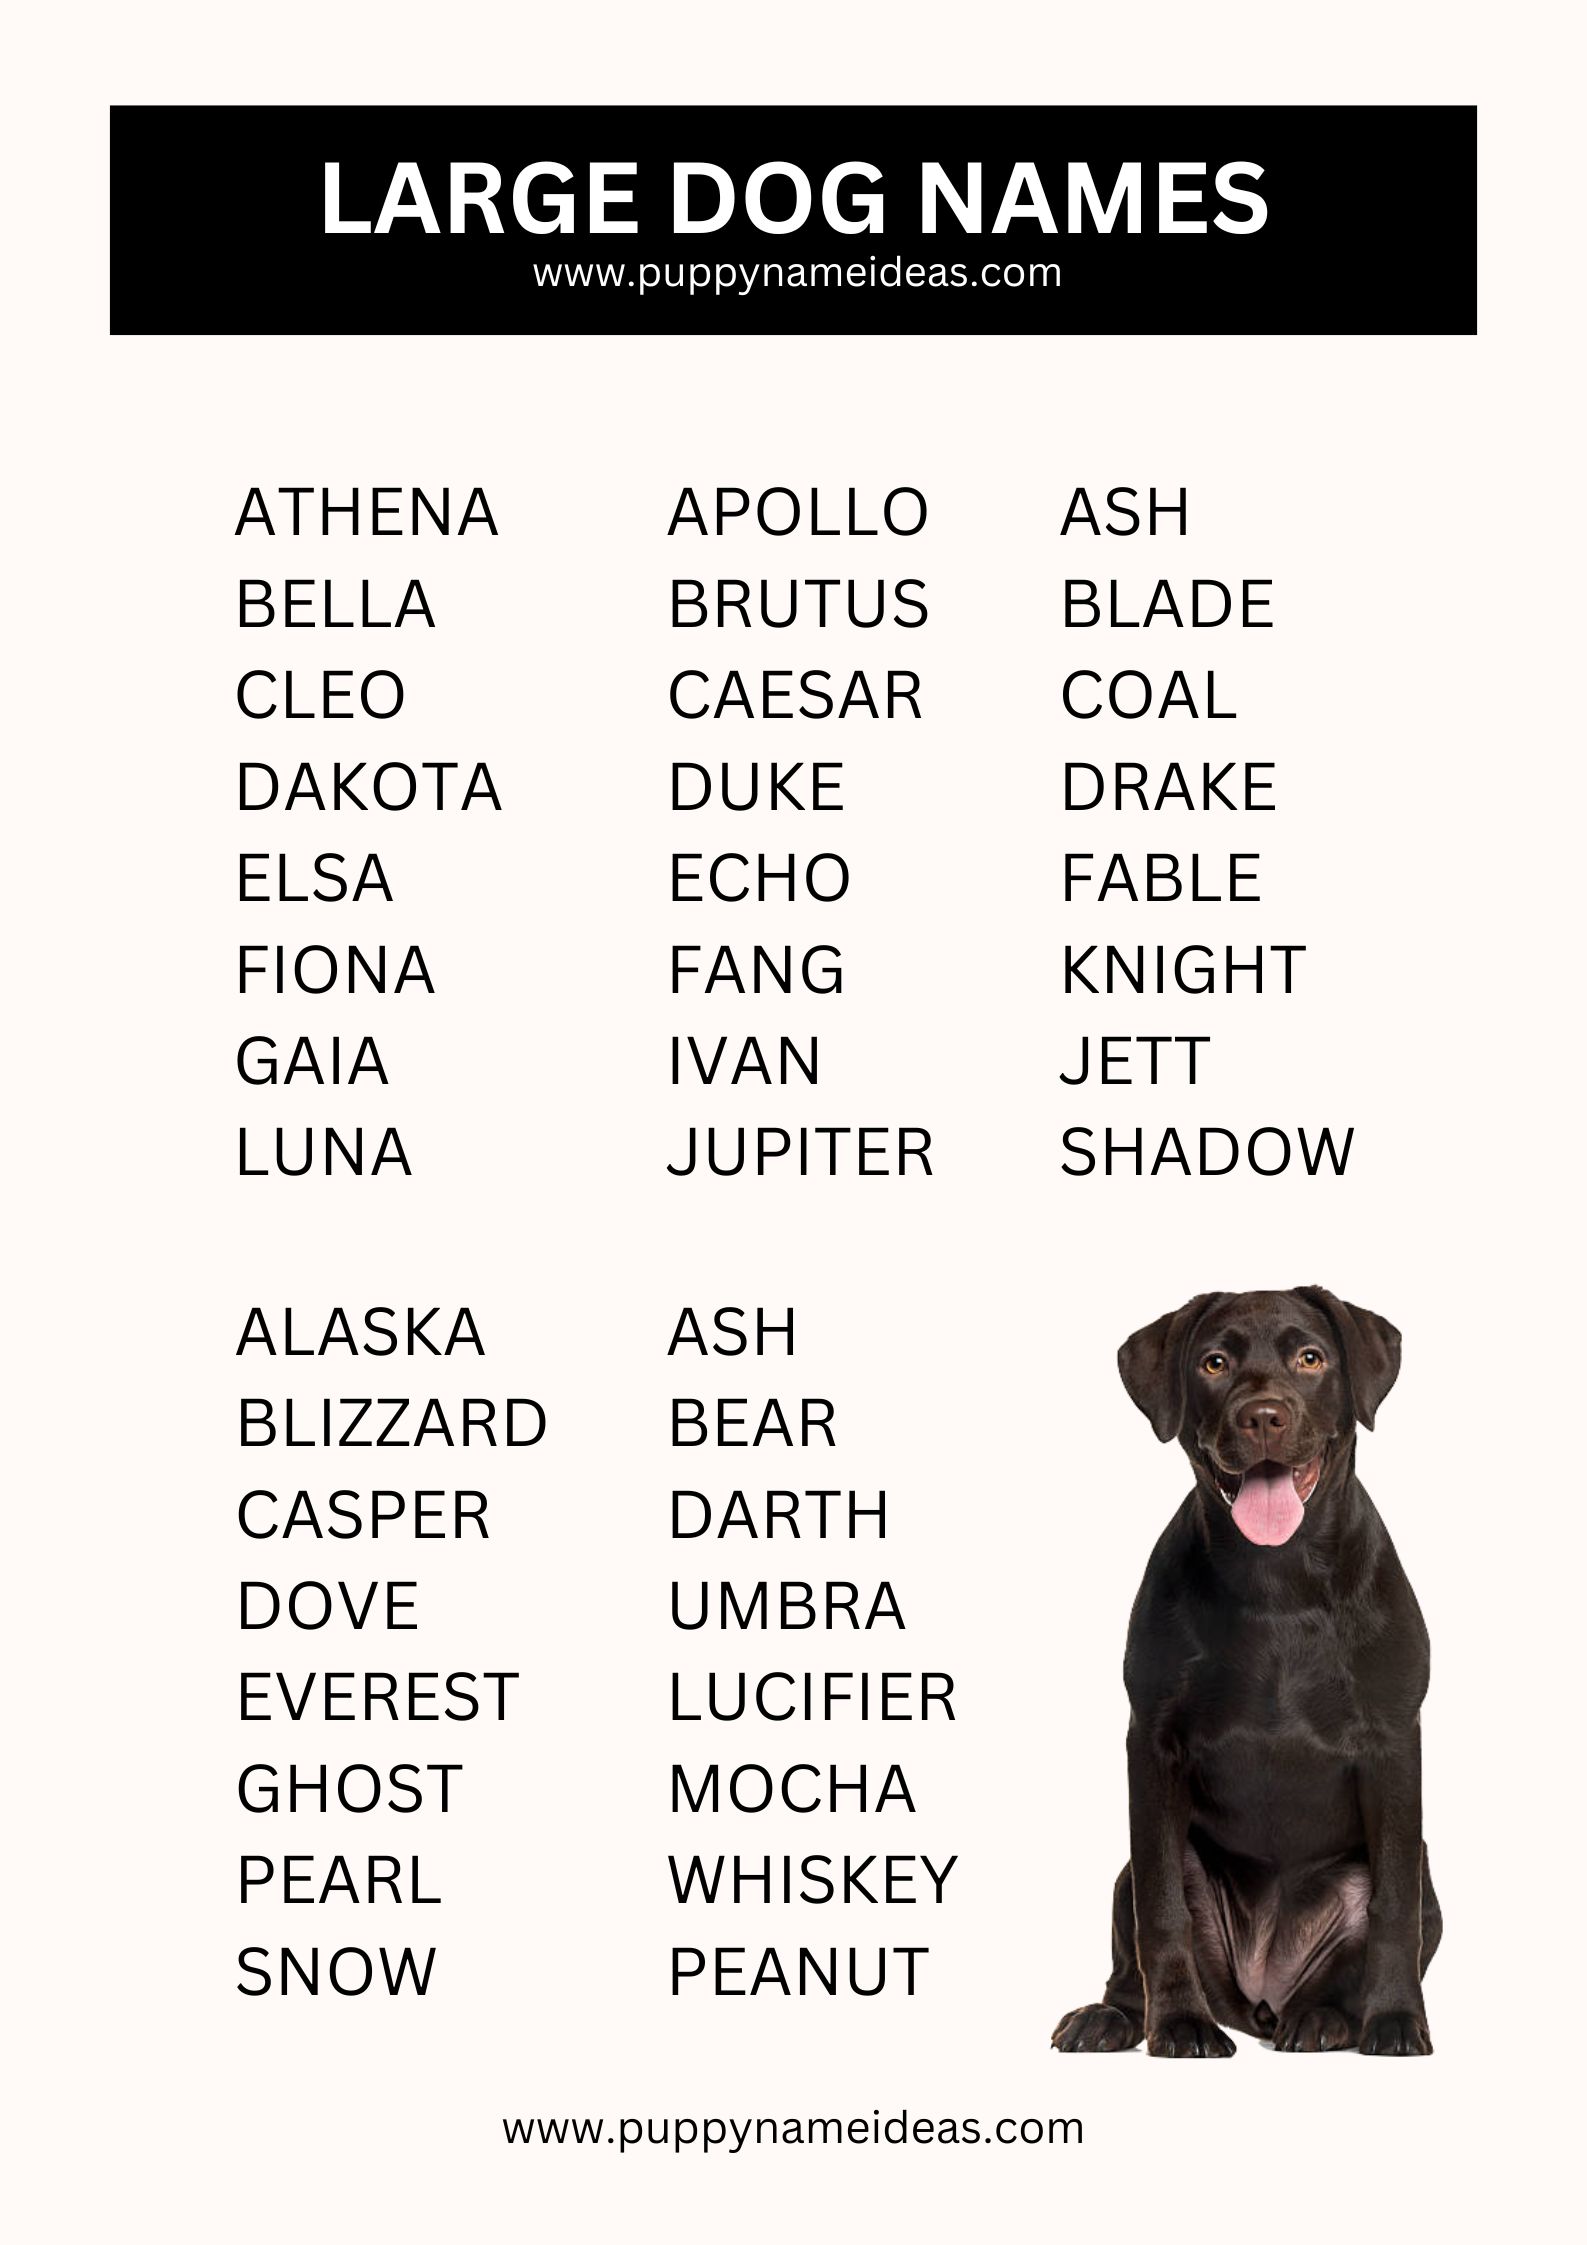 list of large dog names